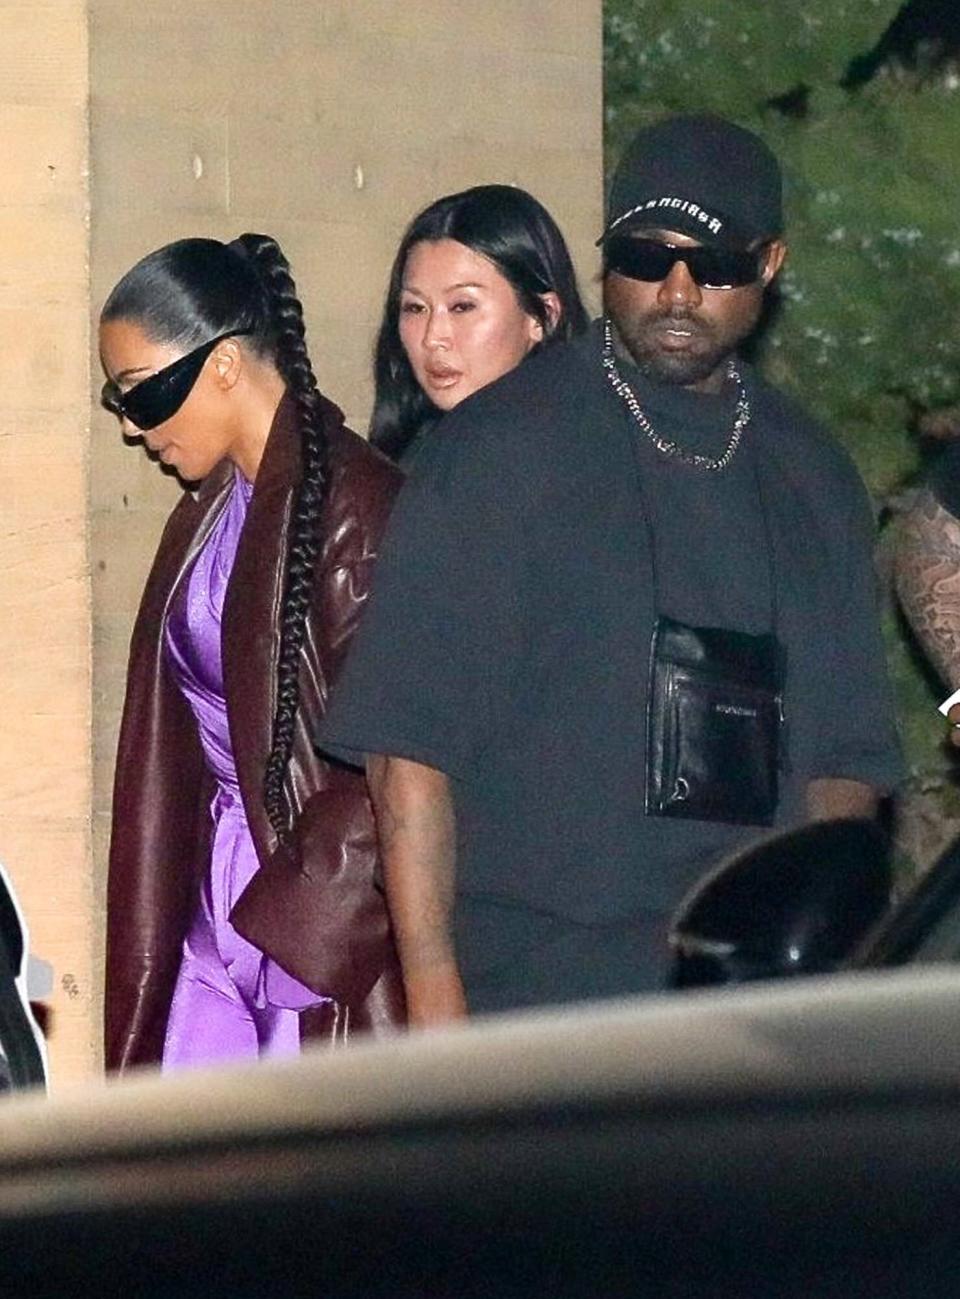 Kim Kardashian and Kanye West go to dinner together at Nobu in Malibu